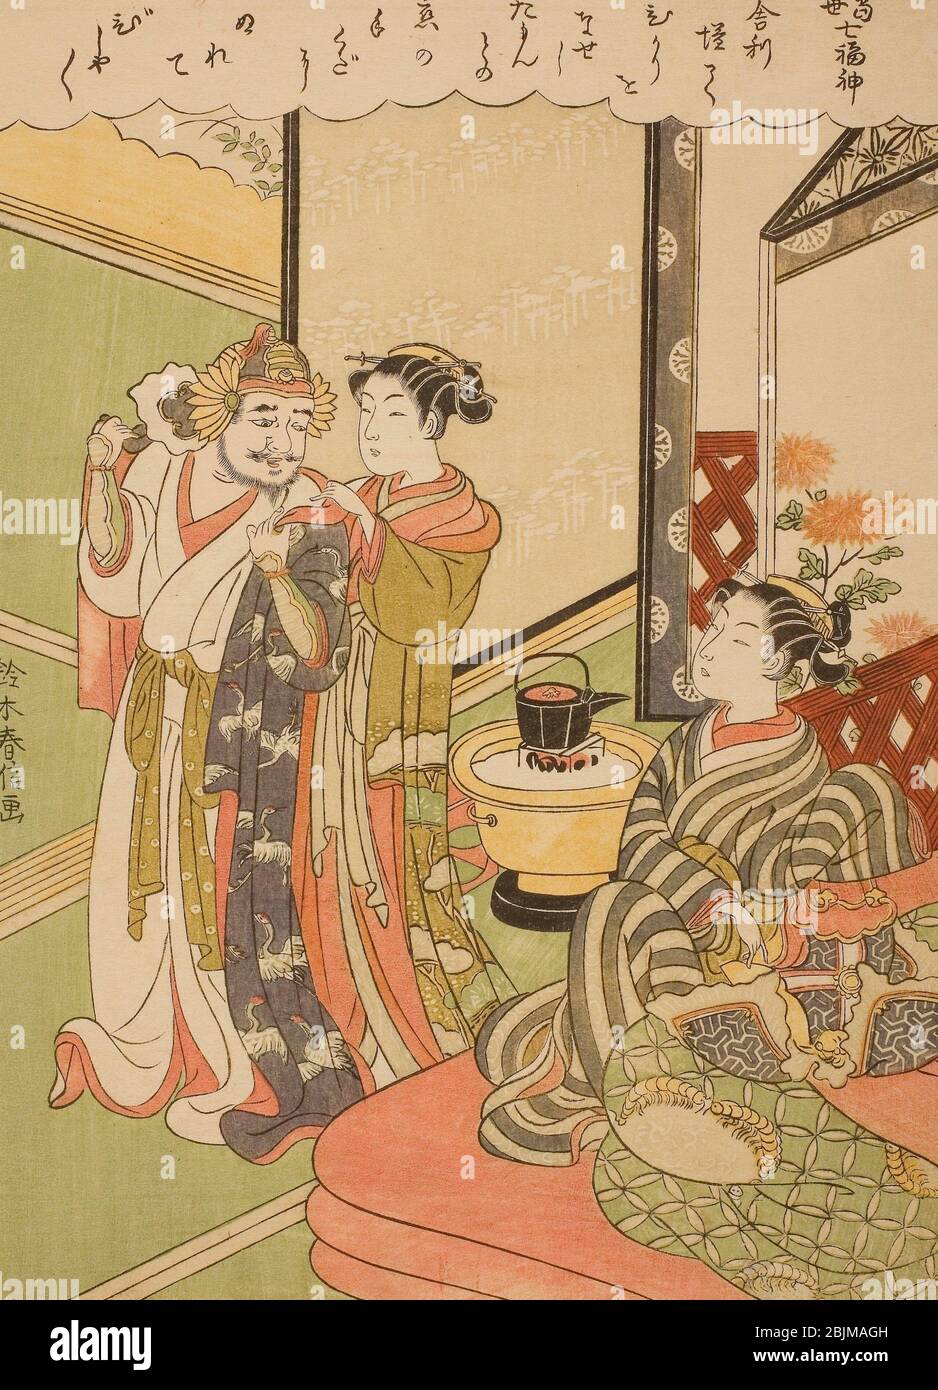 Author: Suzuki Harunobu. Tamonten, from the series 'The Seven Gods of Good Luck in Modern Life (Tosei Shichi Fukujin)' - c. 1769 - Suzuki Harunobu ^o Stock Photo